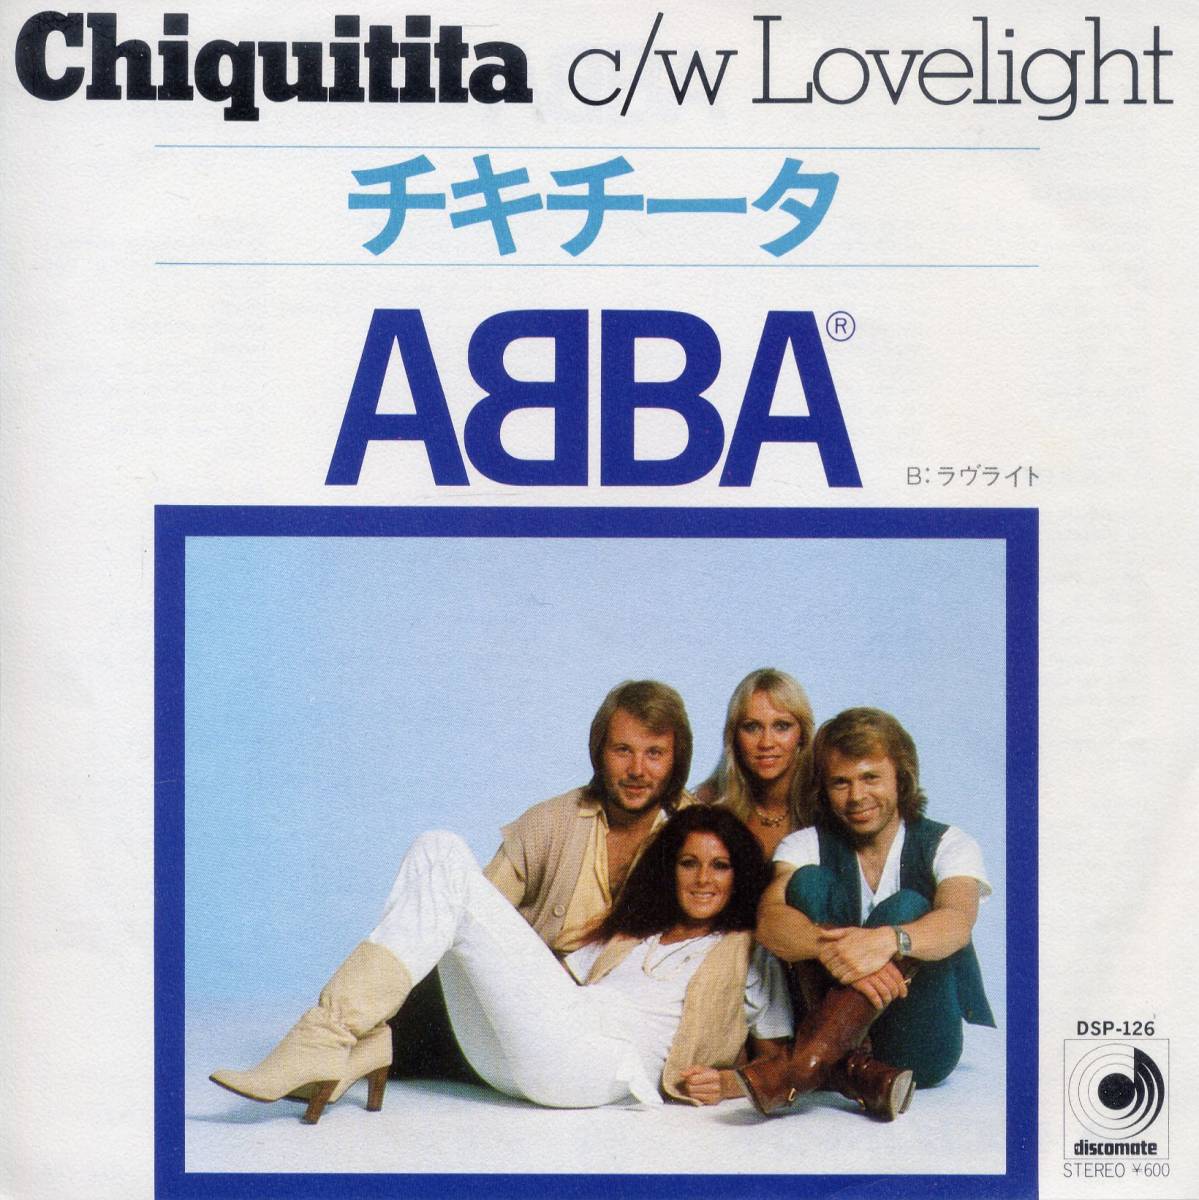 chikichi-ta|aba( single * record ) Chiquitita|ABBA